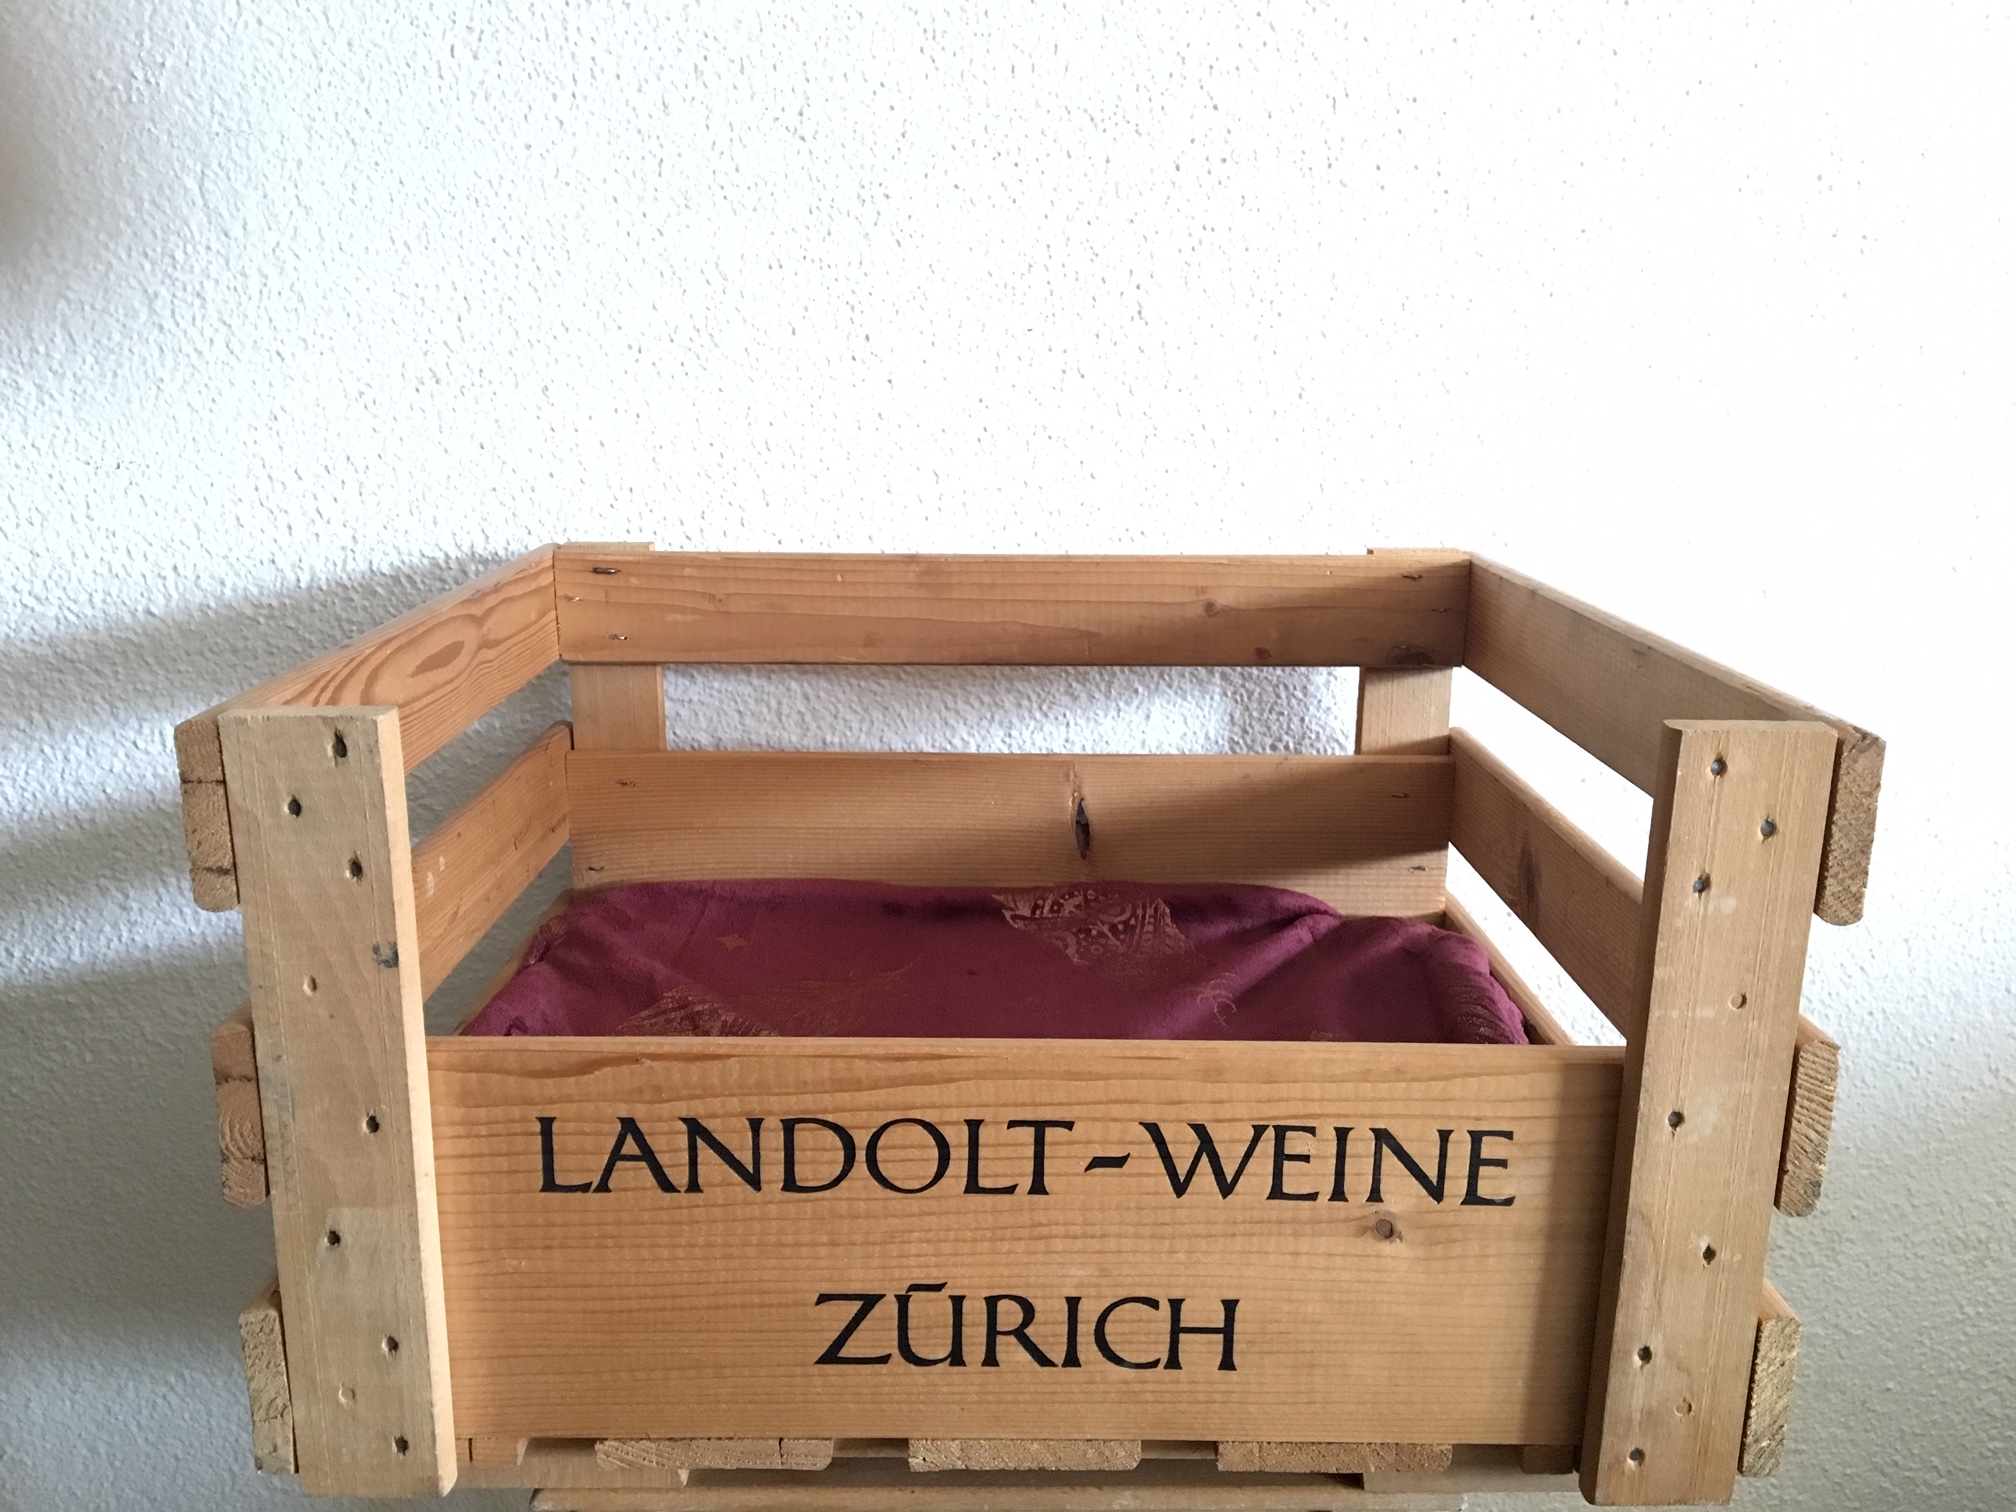 Upcycling wine box bordeaux